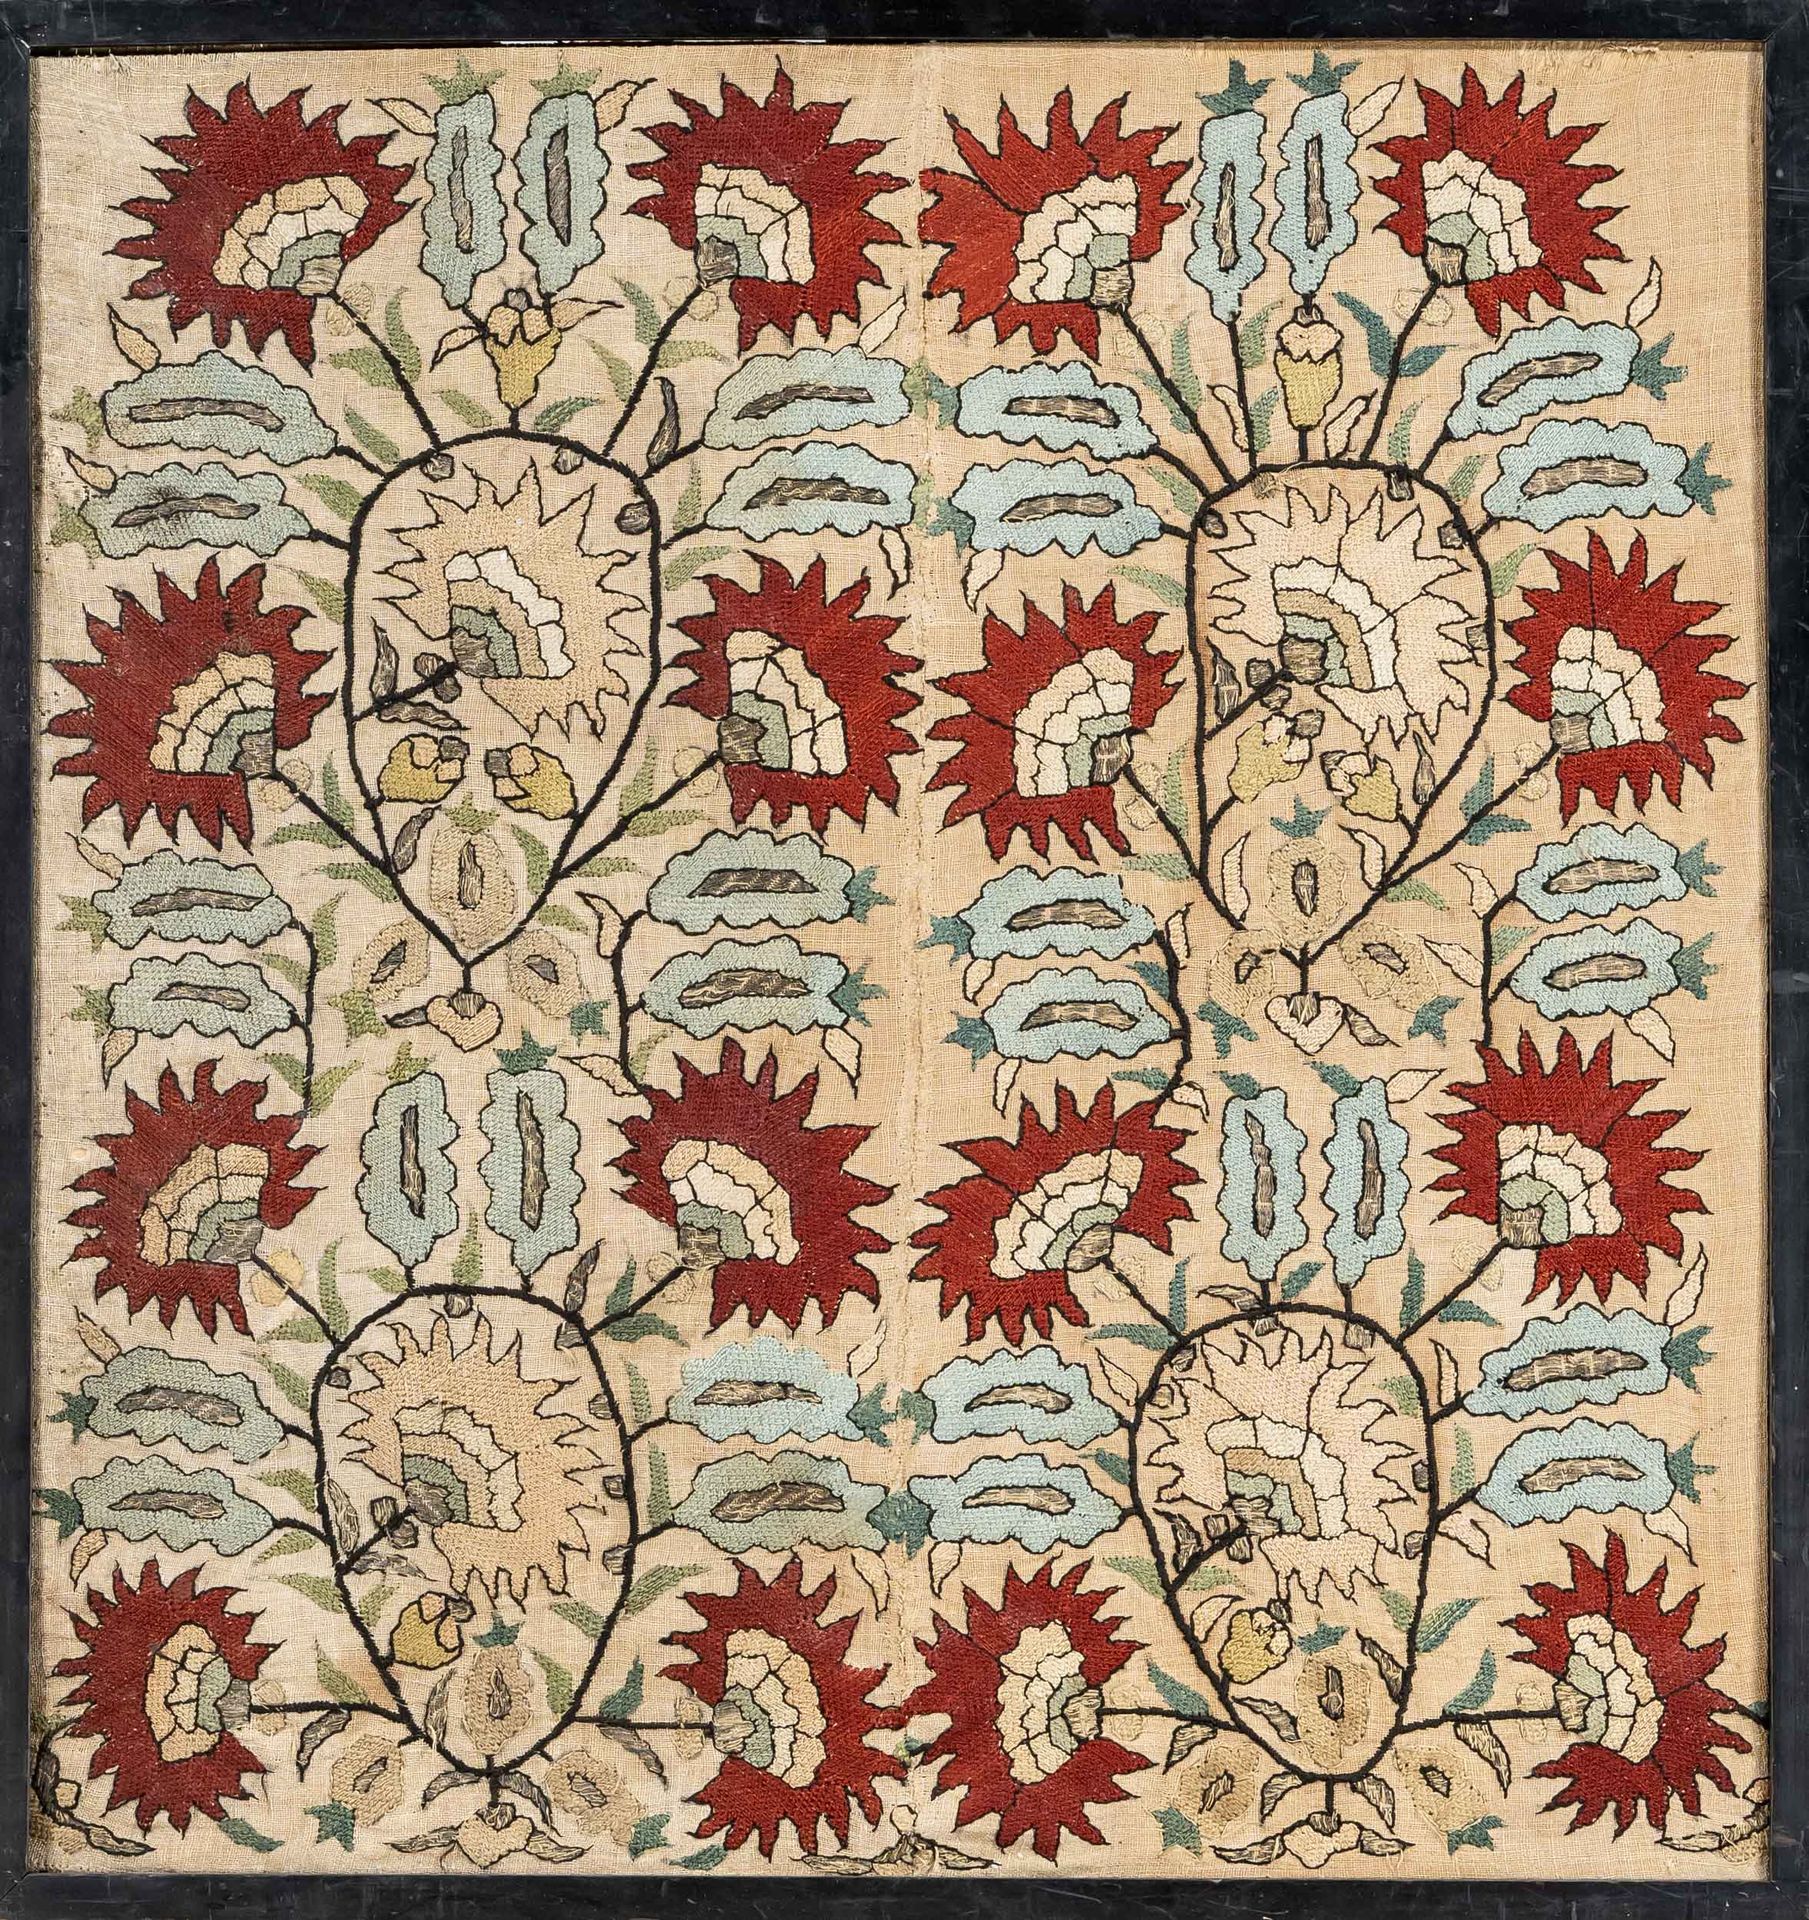 Null 有框刺绣/纺织品，19世纪末（艺术与工艺？）亚麻布上的红花卷须，窄框，略有摩擦和碰撞，略显肮脏。49 x 51 厘米